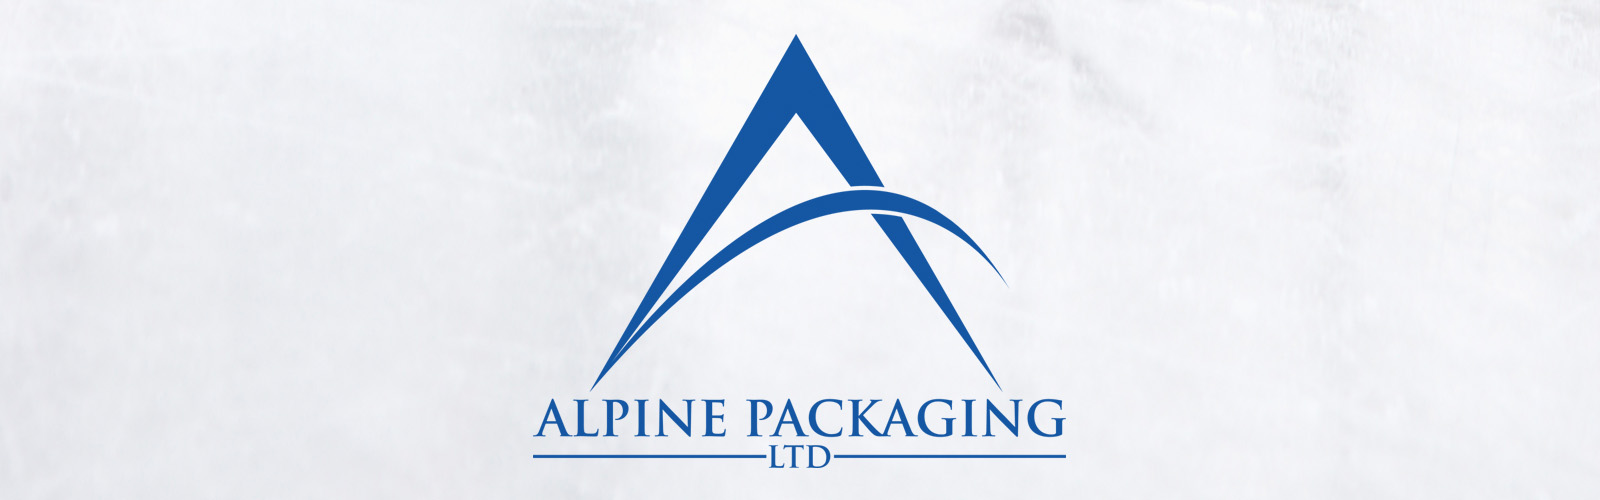 Alpine Packaging Ltd